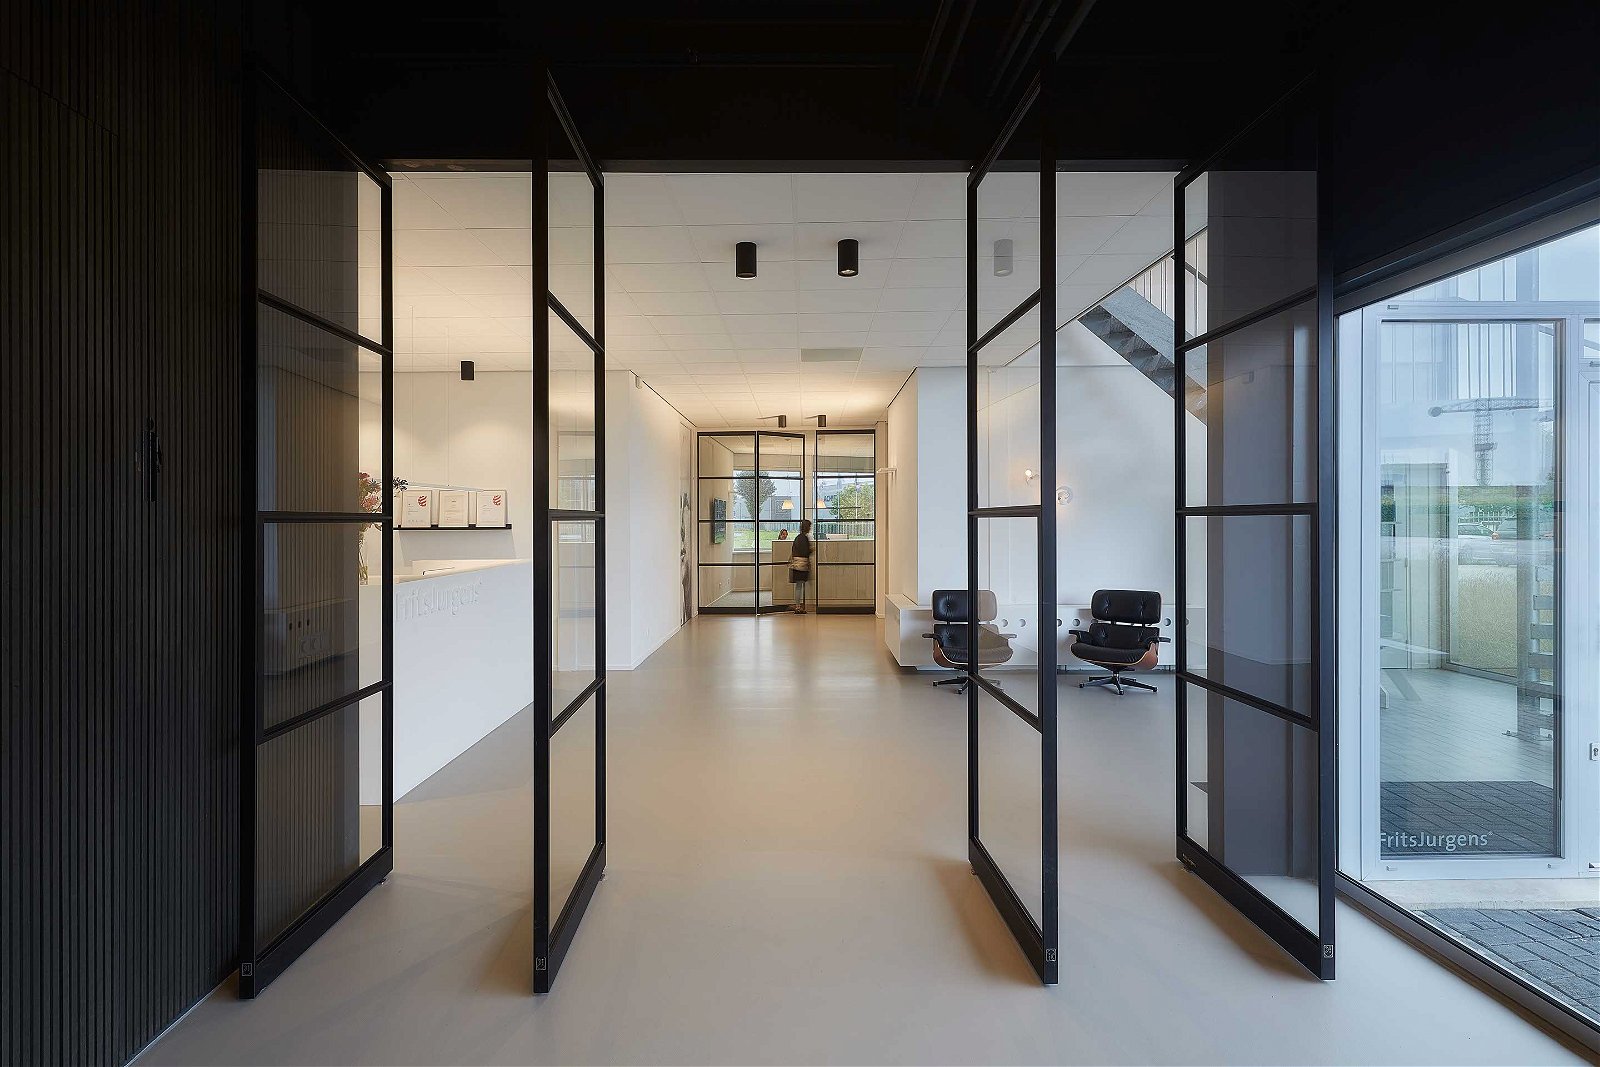 369.-Office-FritsJurgens,-doors-by-Harryvan-Interieurbouw,-photography-by-Gerard-van-der-Beek06.jpeg